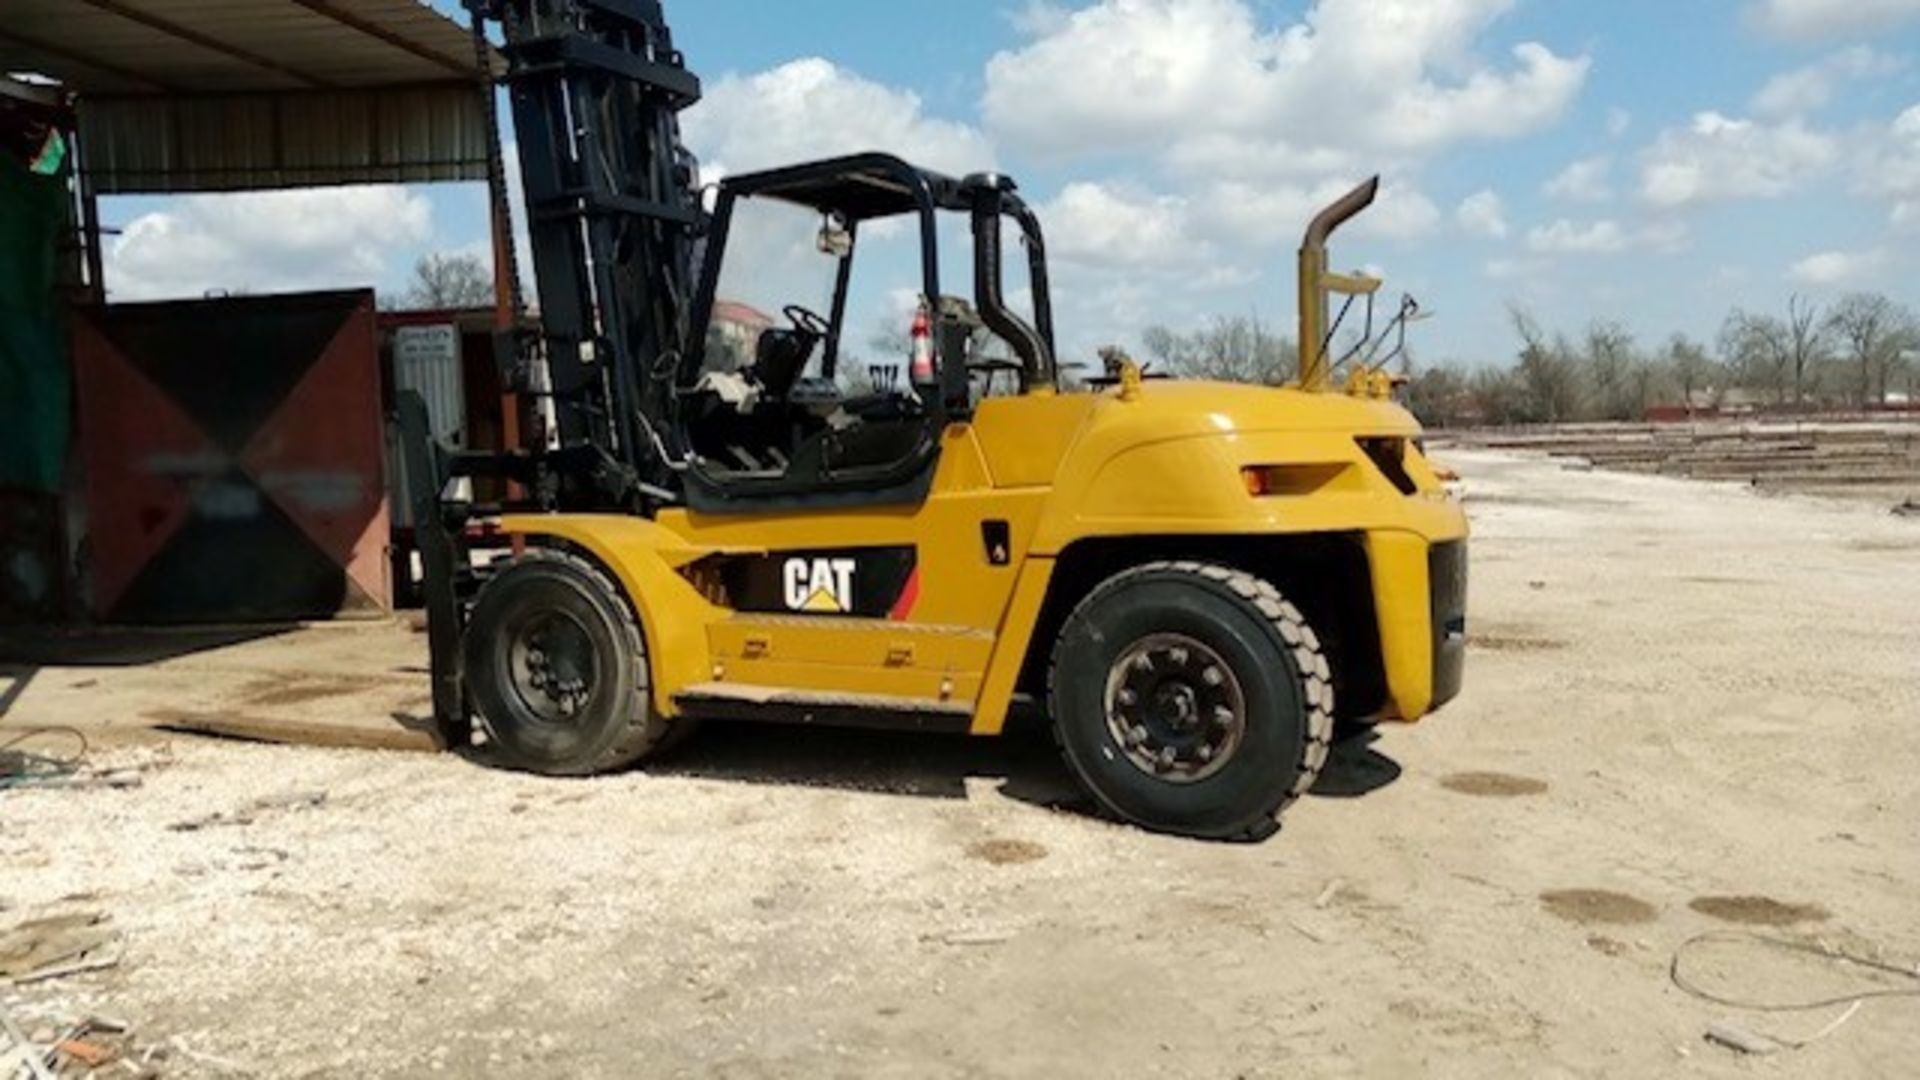 CAT Model P33000 Forklift, 33,000 # capacity - Image 2 of 13